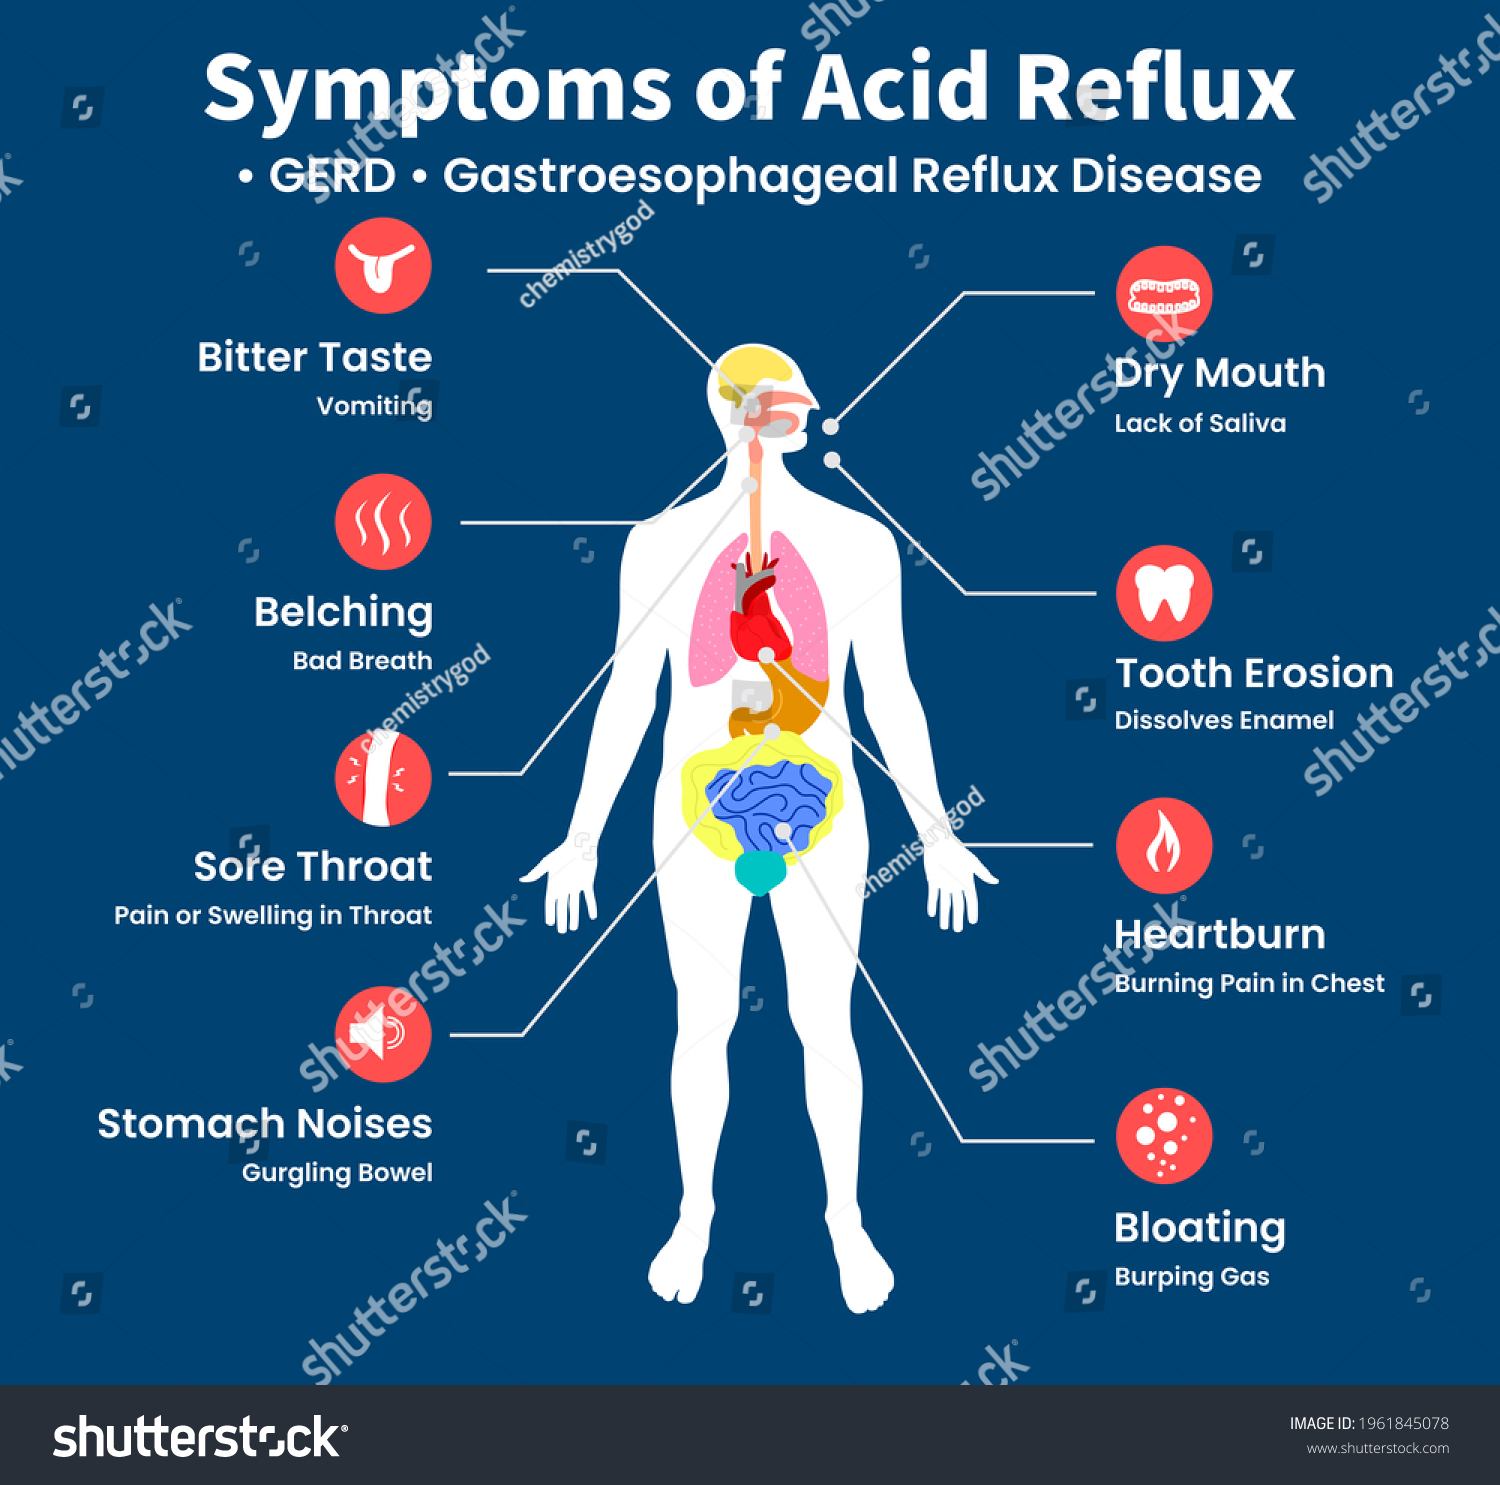 Reflux acid 4 Stages